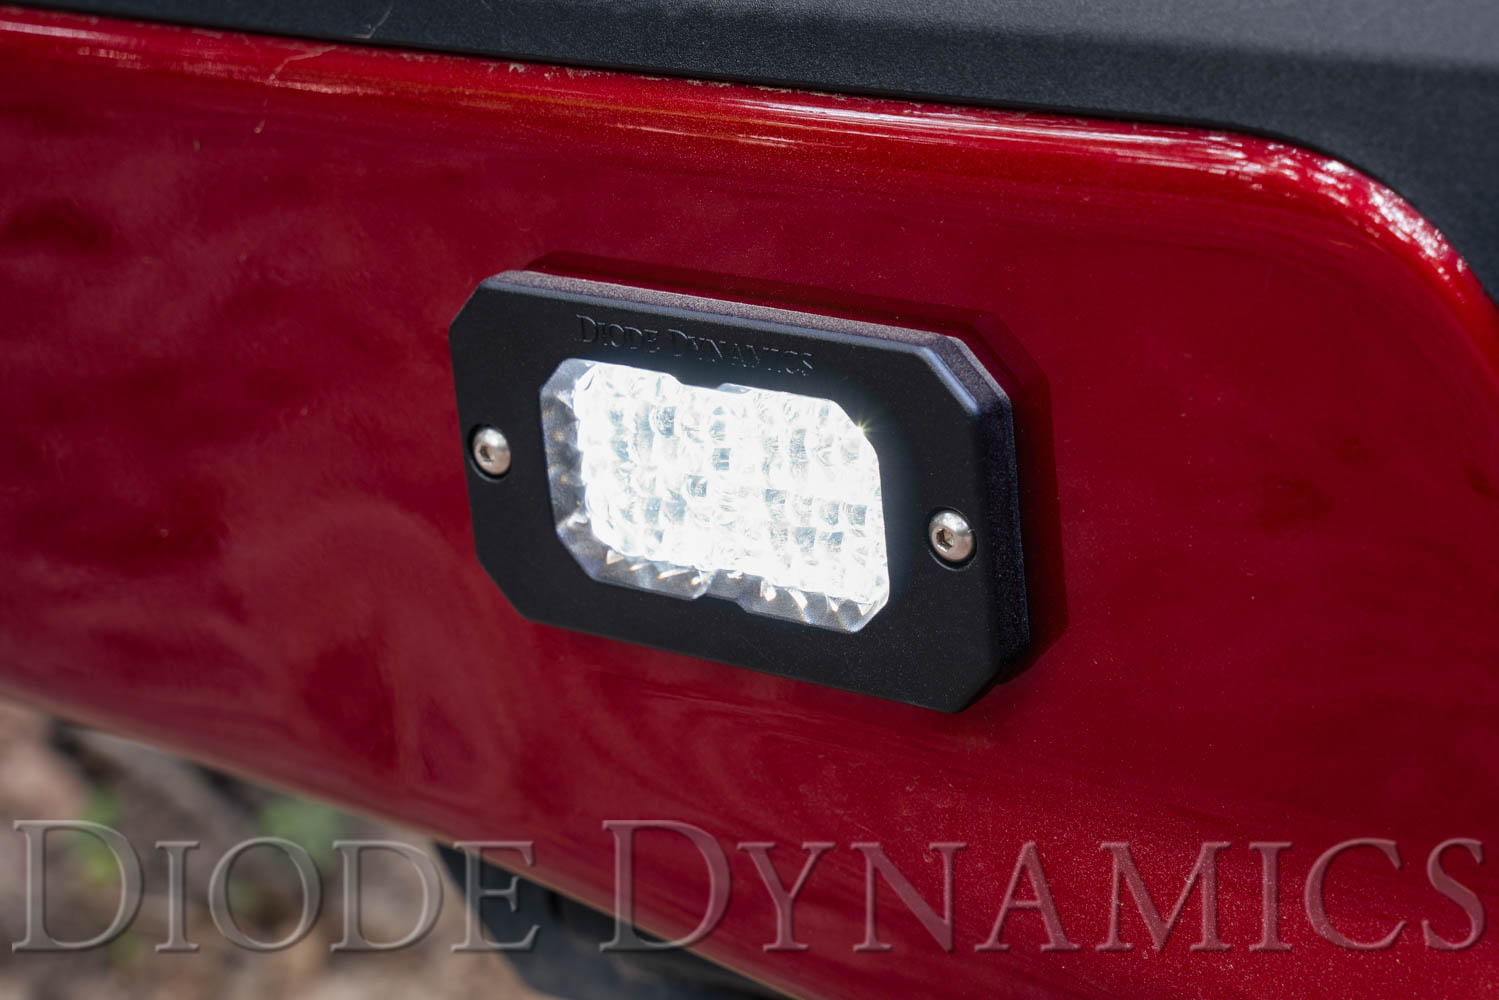 Diode Dynamics Stage Series 2 Inch LED Pod, Sport White Fog Flush ABL Pair